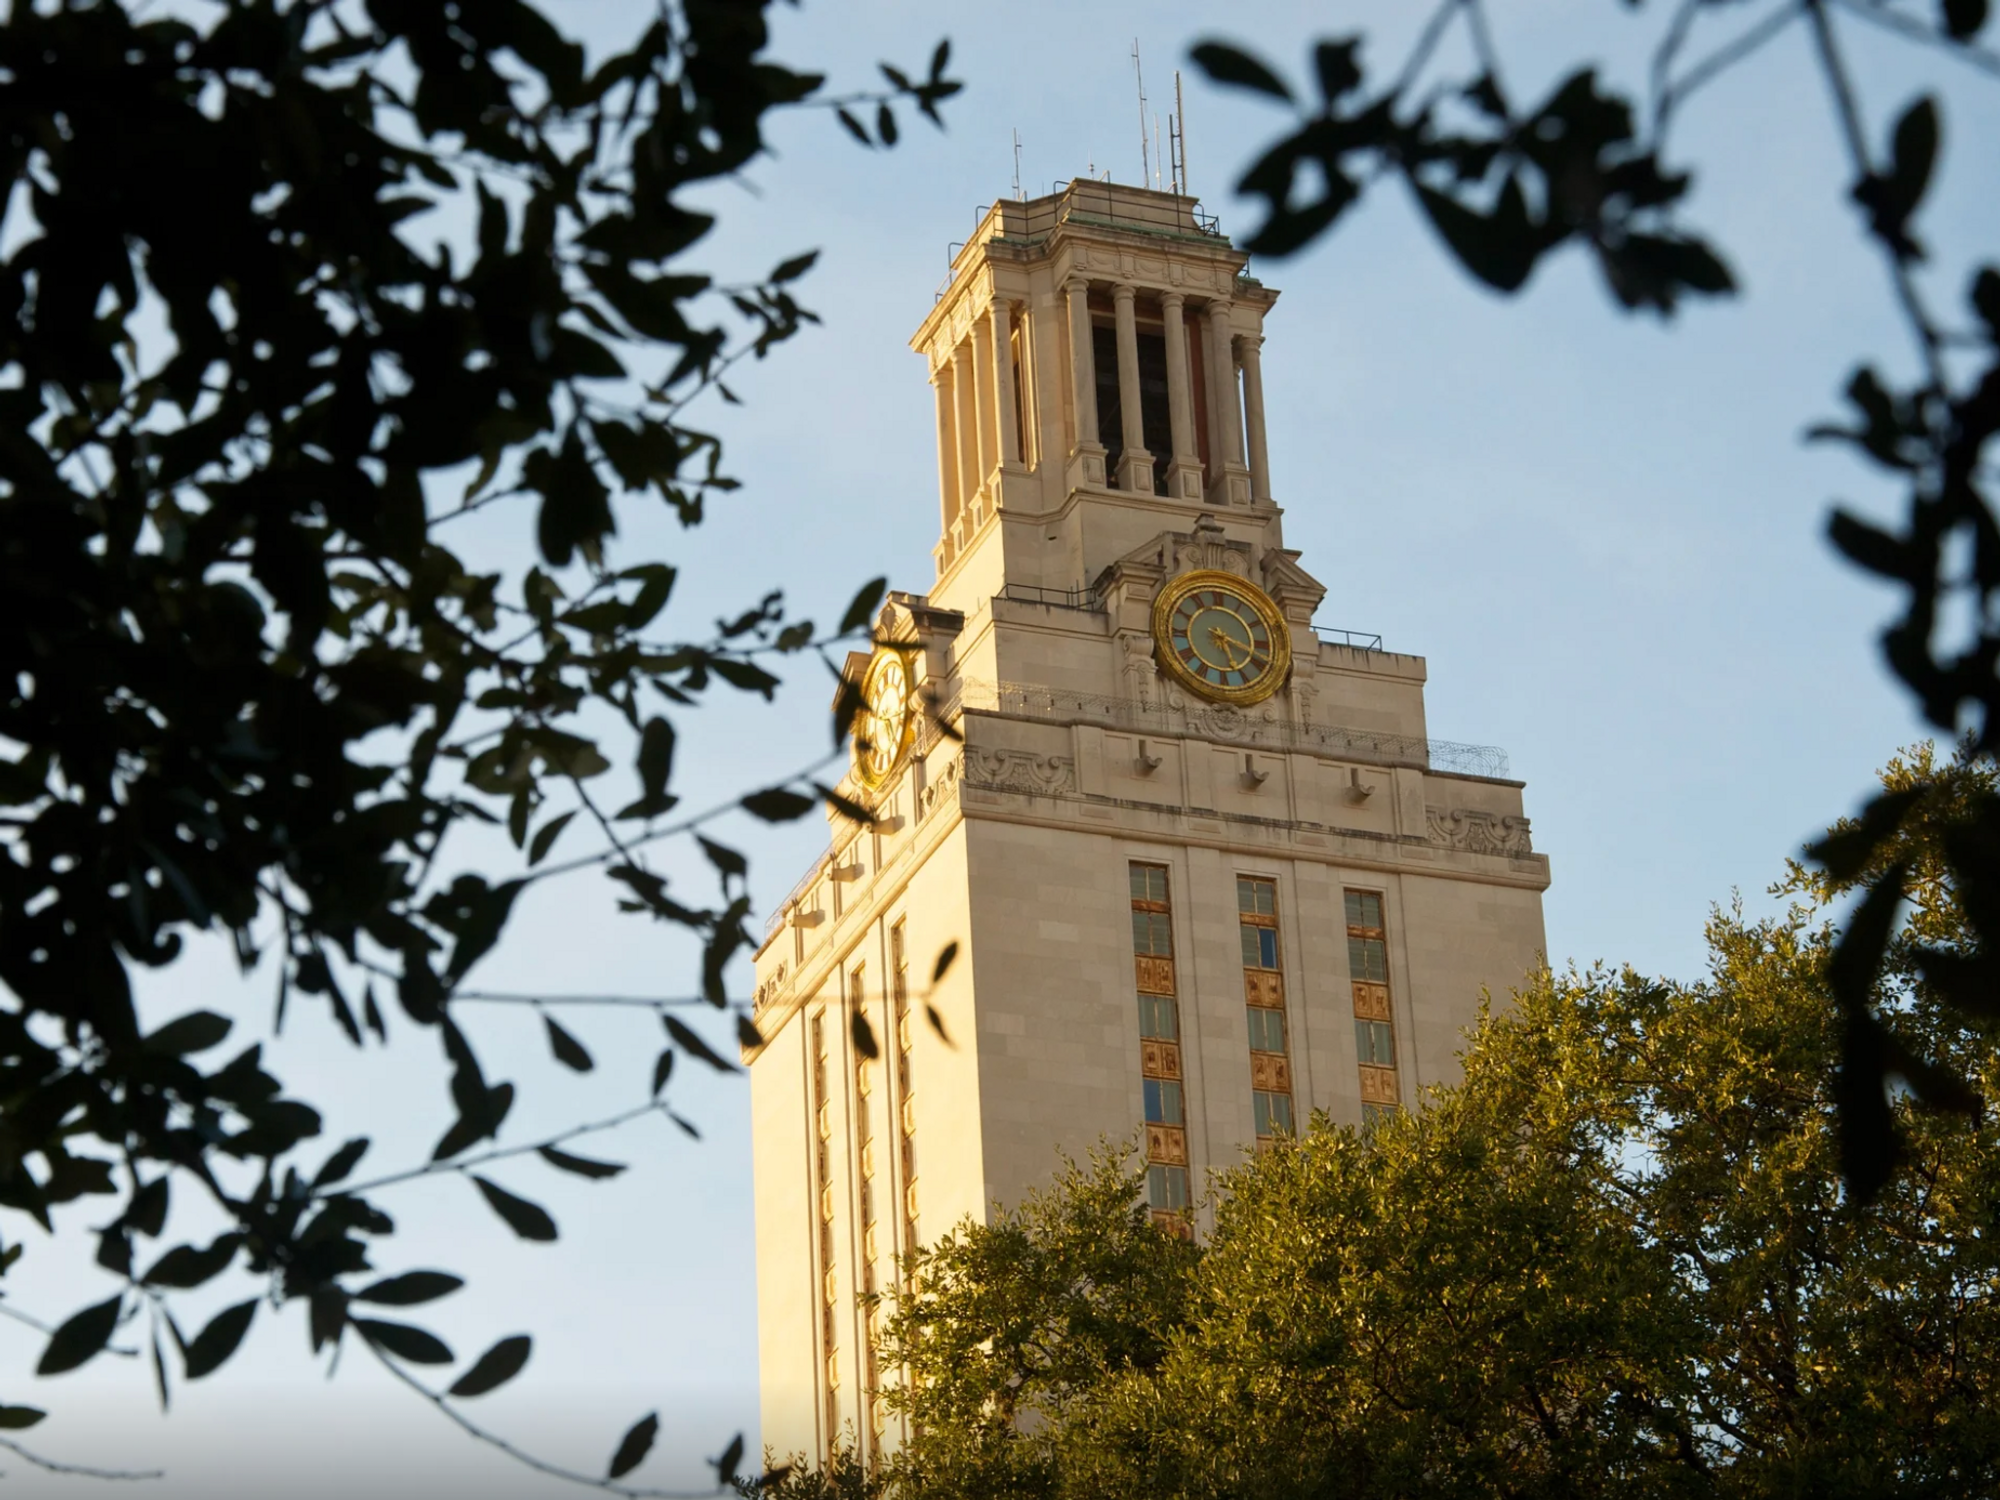 University of Texas at Austin tower